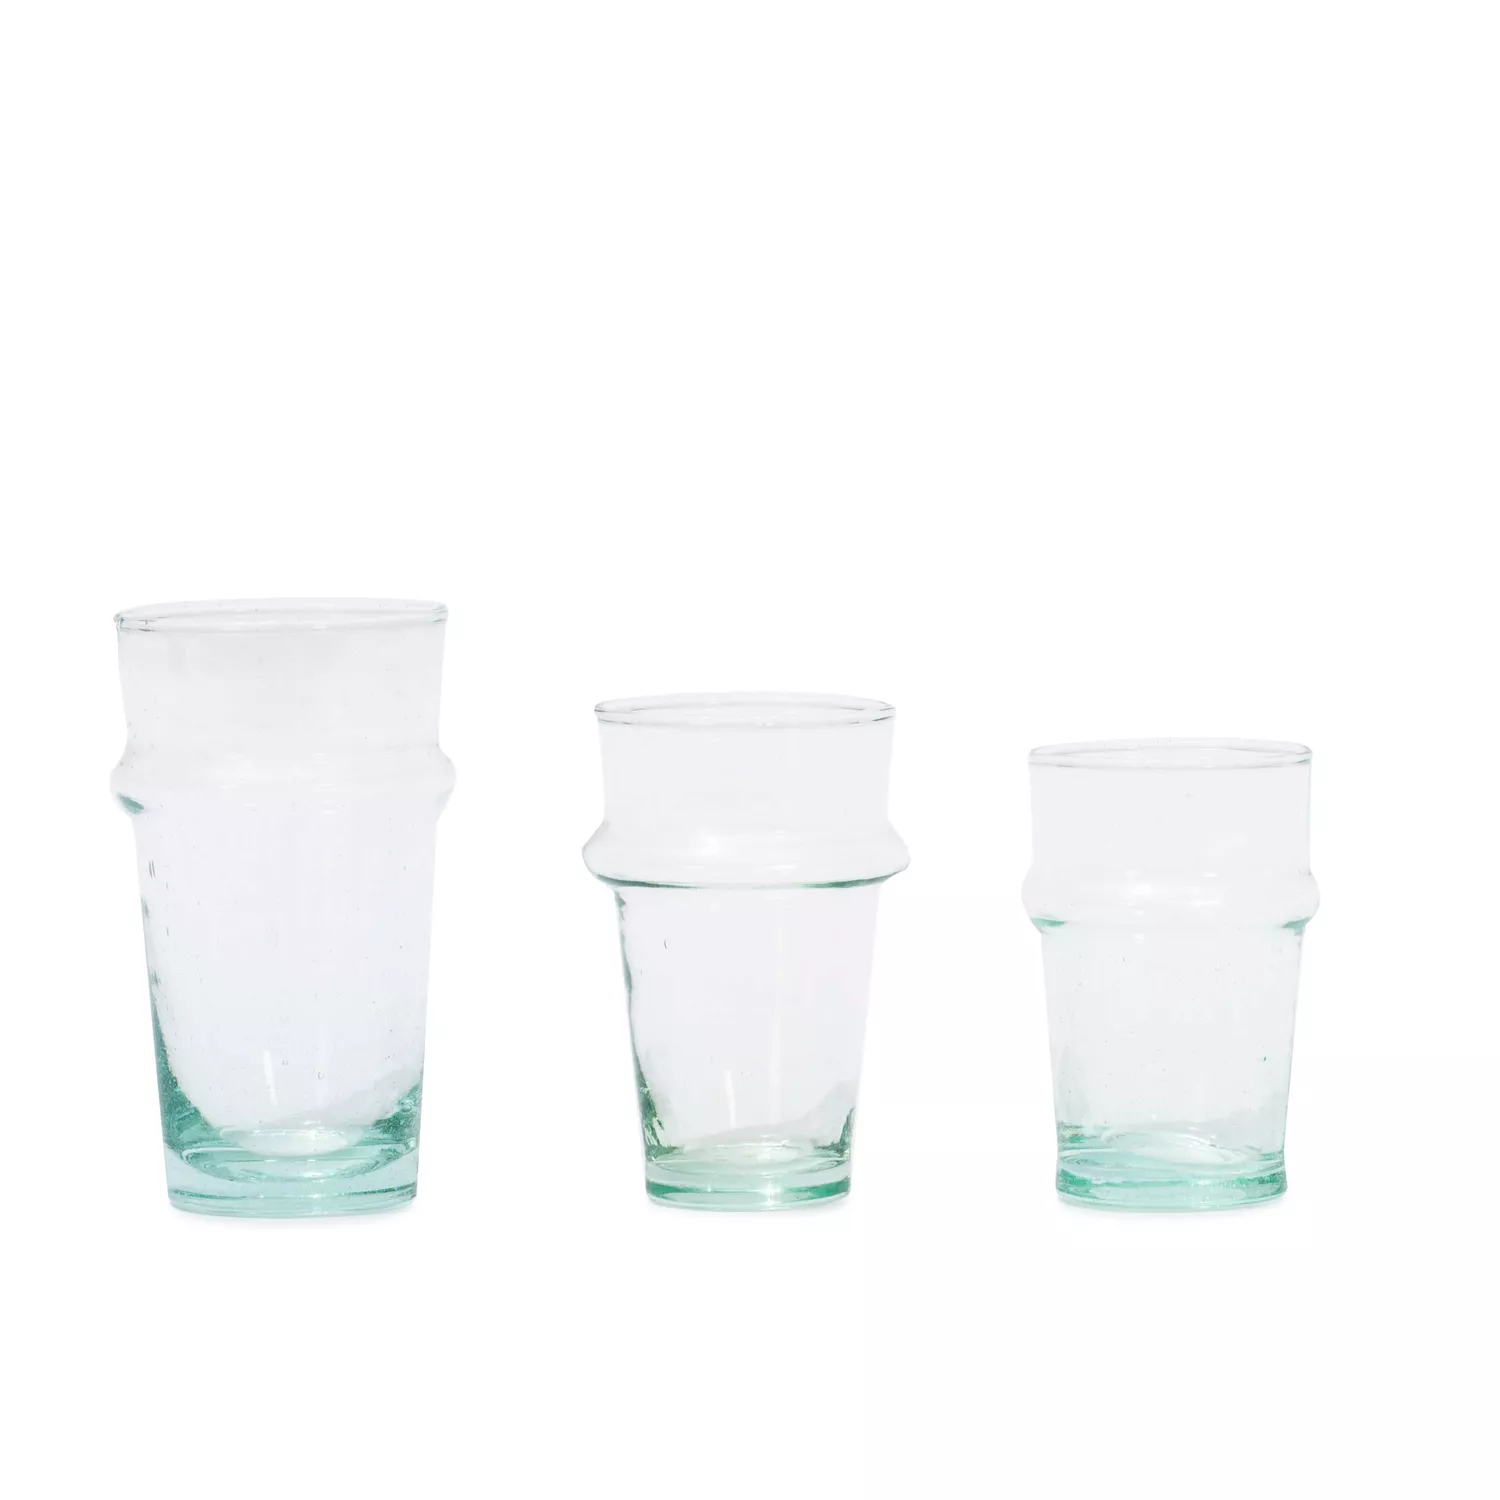 Alcantara-Frederic Beldi Recycled Glasses, Set of 4